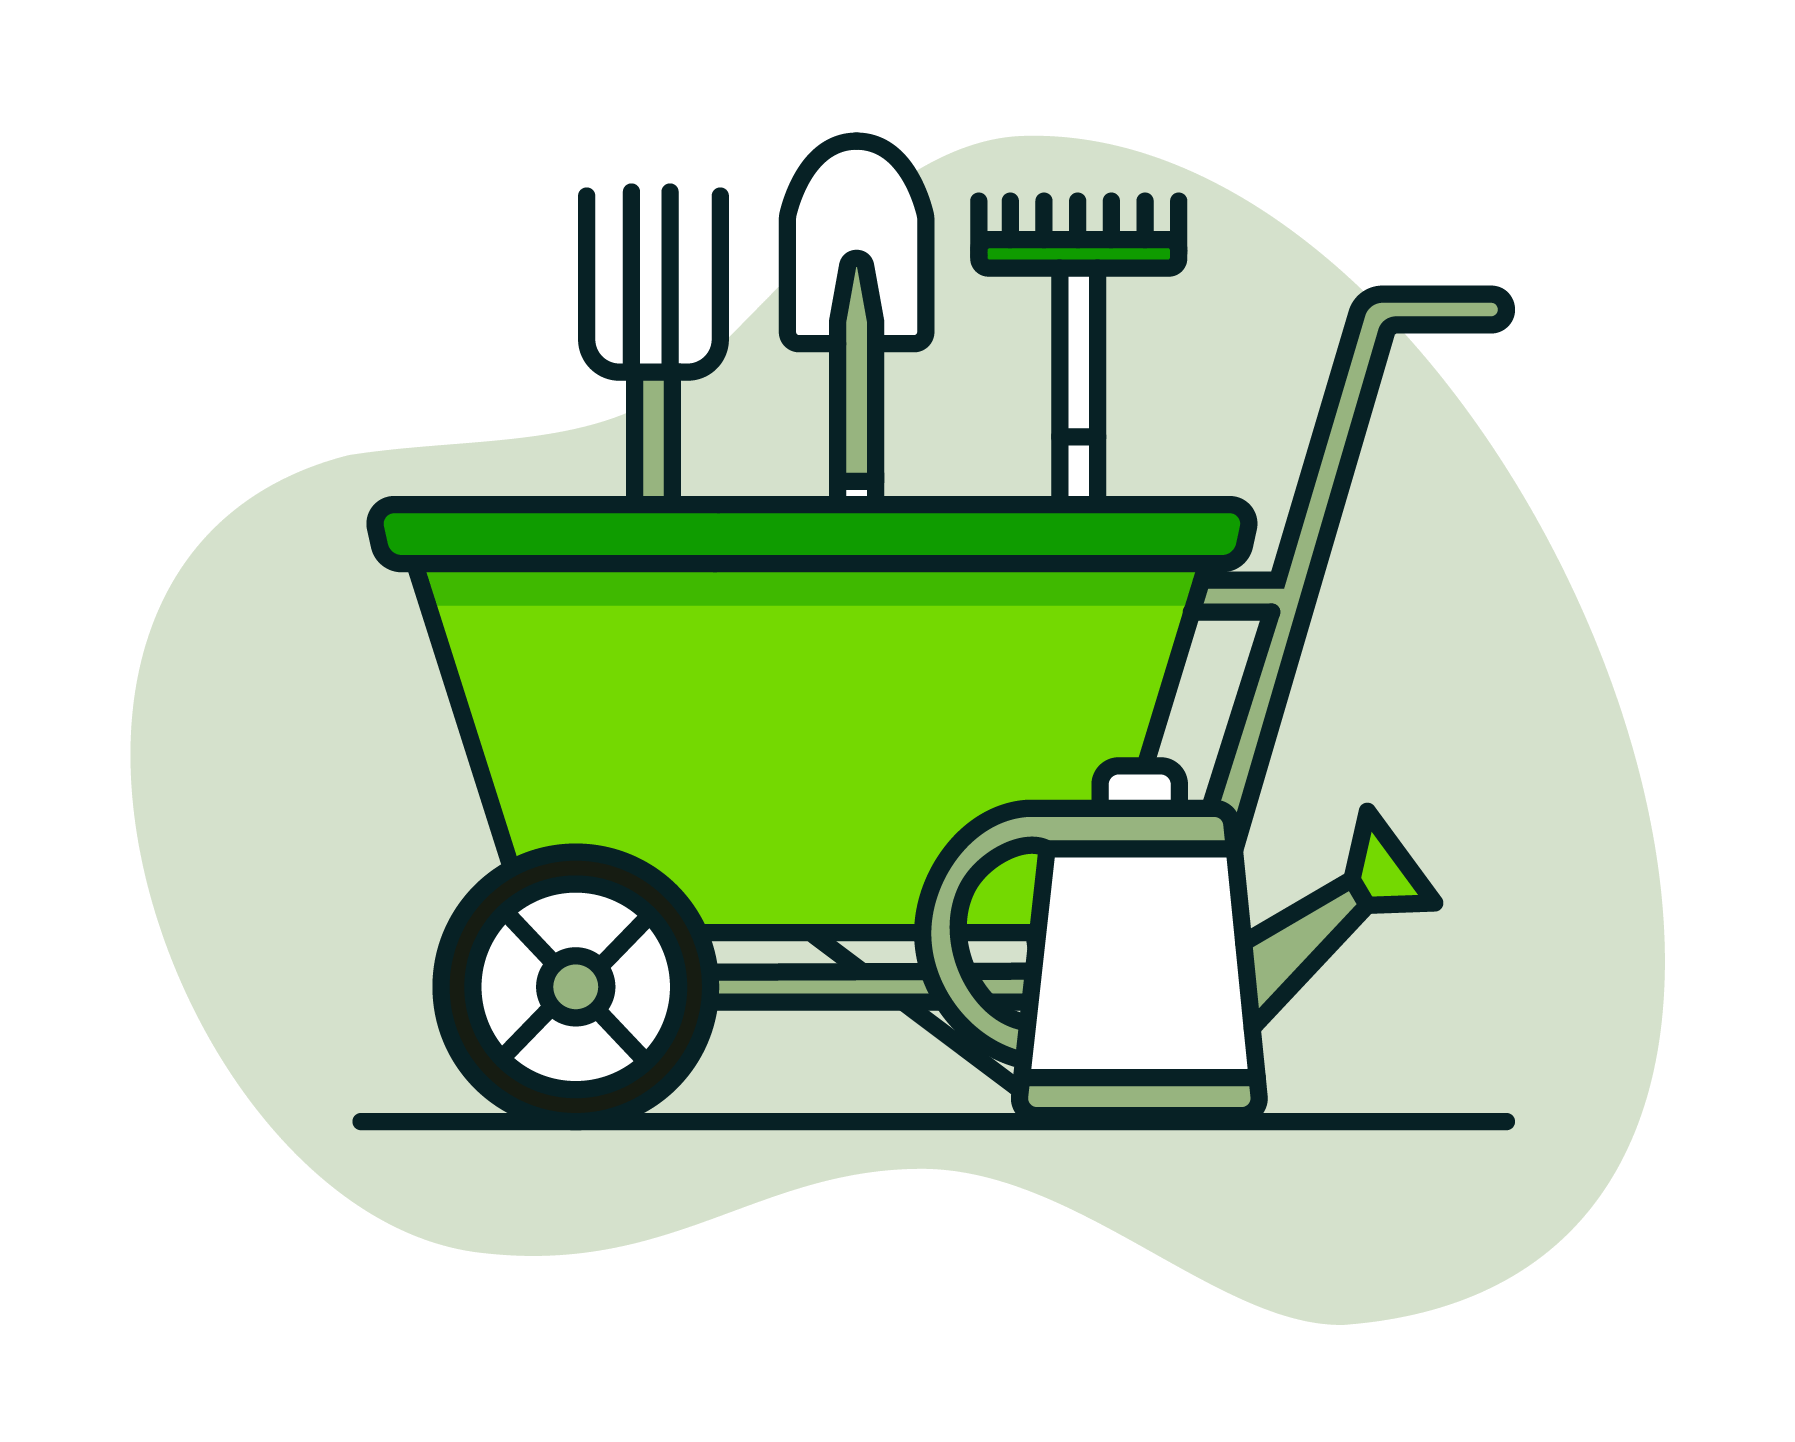 Gardening supplies in a wheelbarrow including a pitchfork, shovel, rake, and watering can